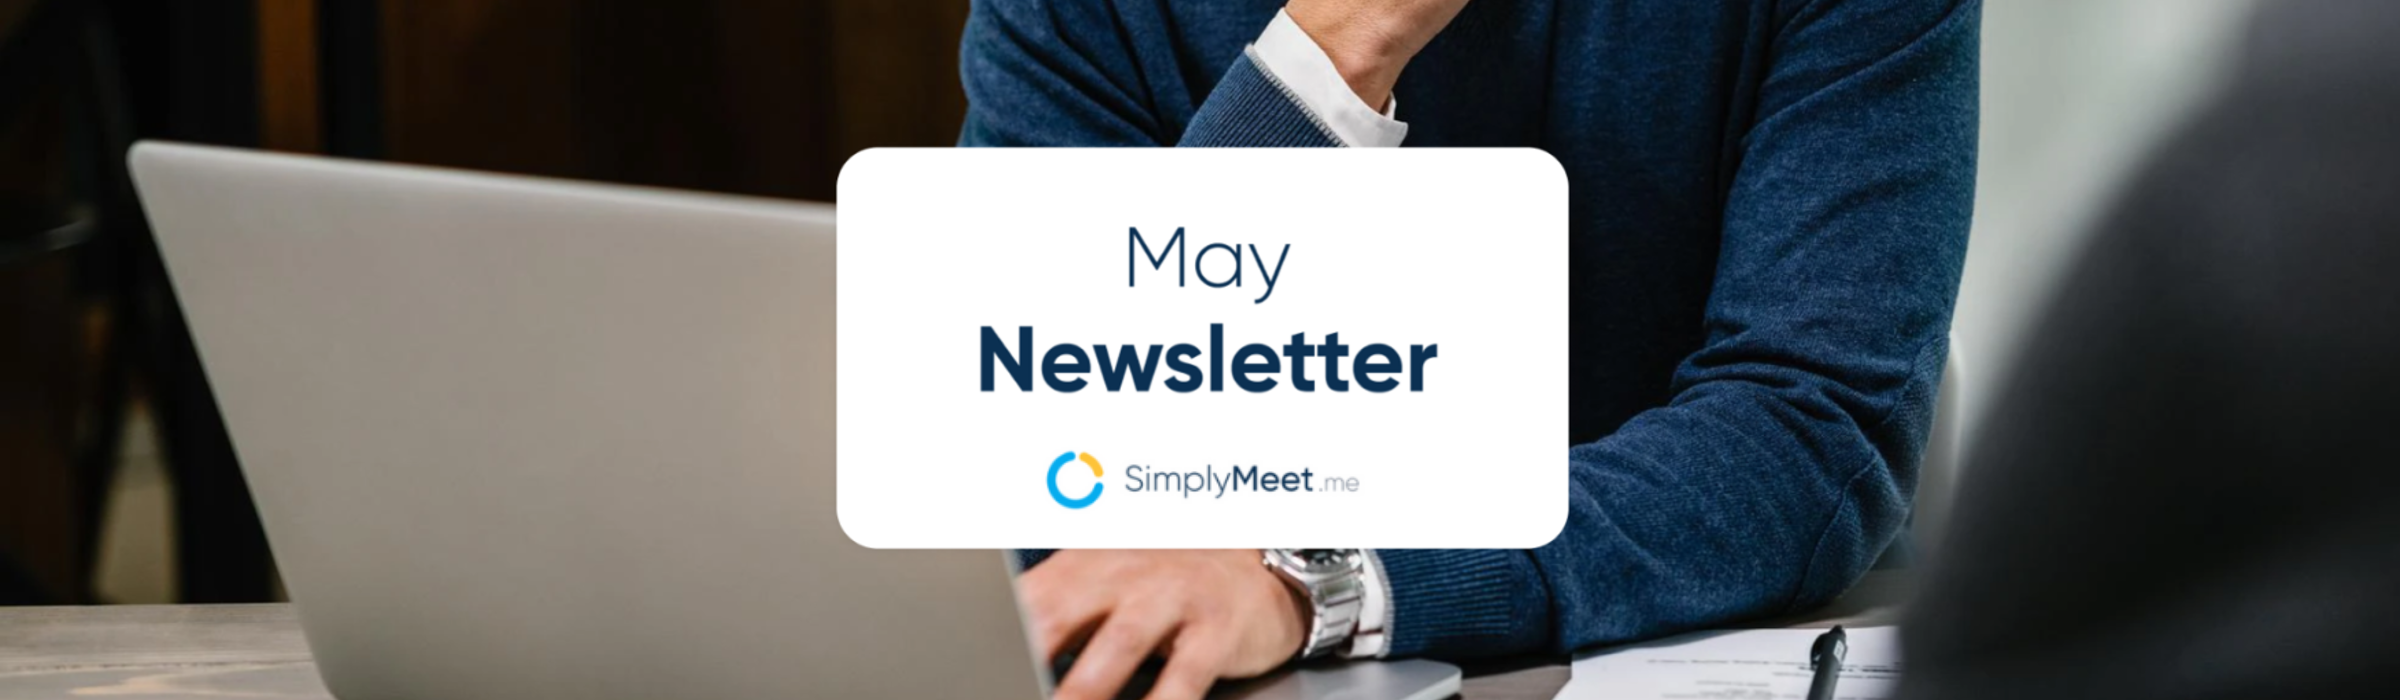 May Newsletter SimplyMeet.me